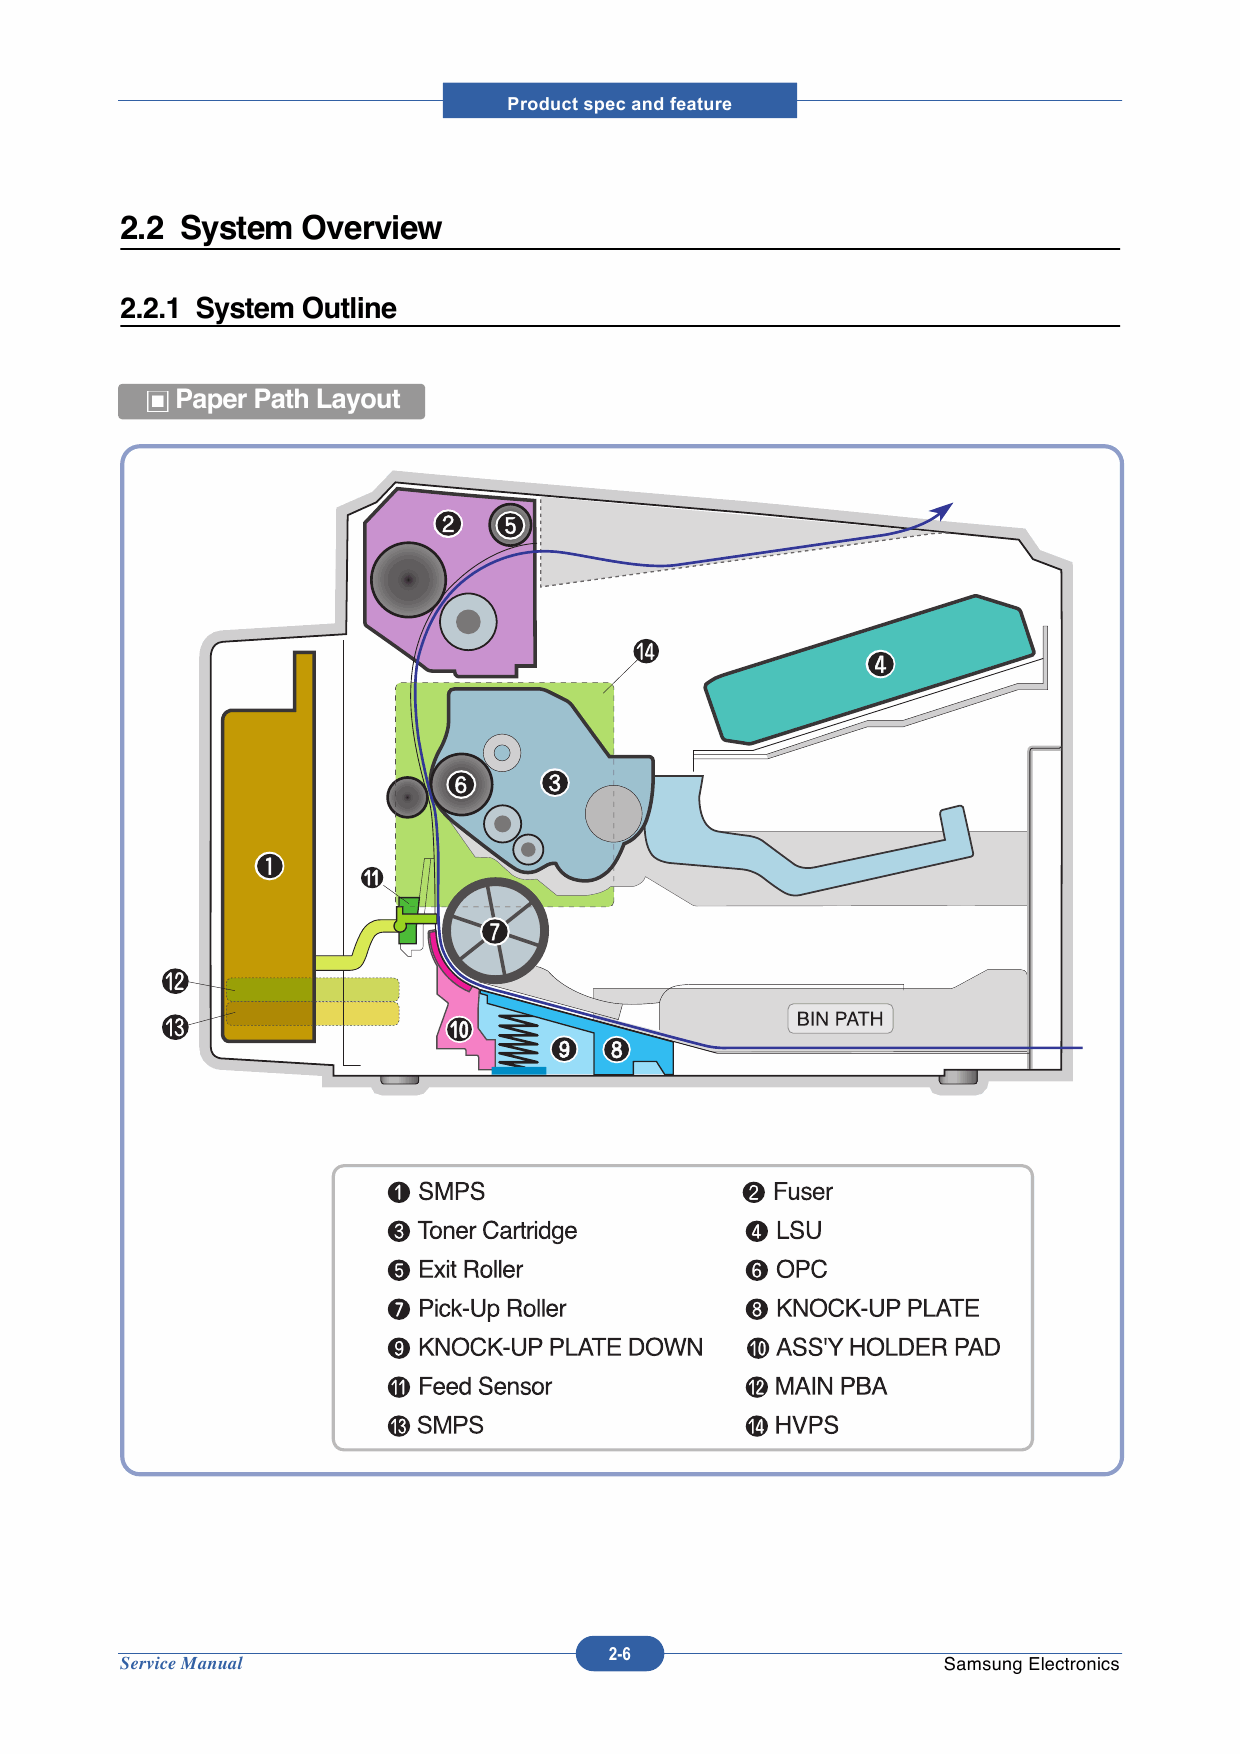 Samsung Laser-Printer ML-1640 2240 Parts and Service Manual-2